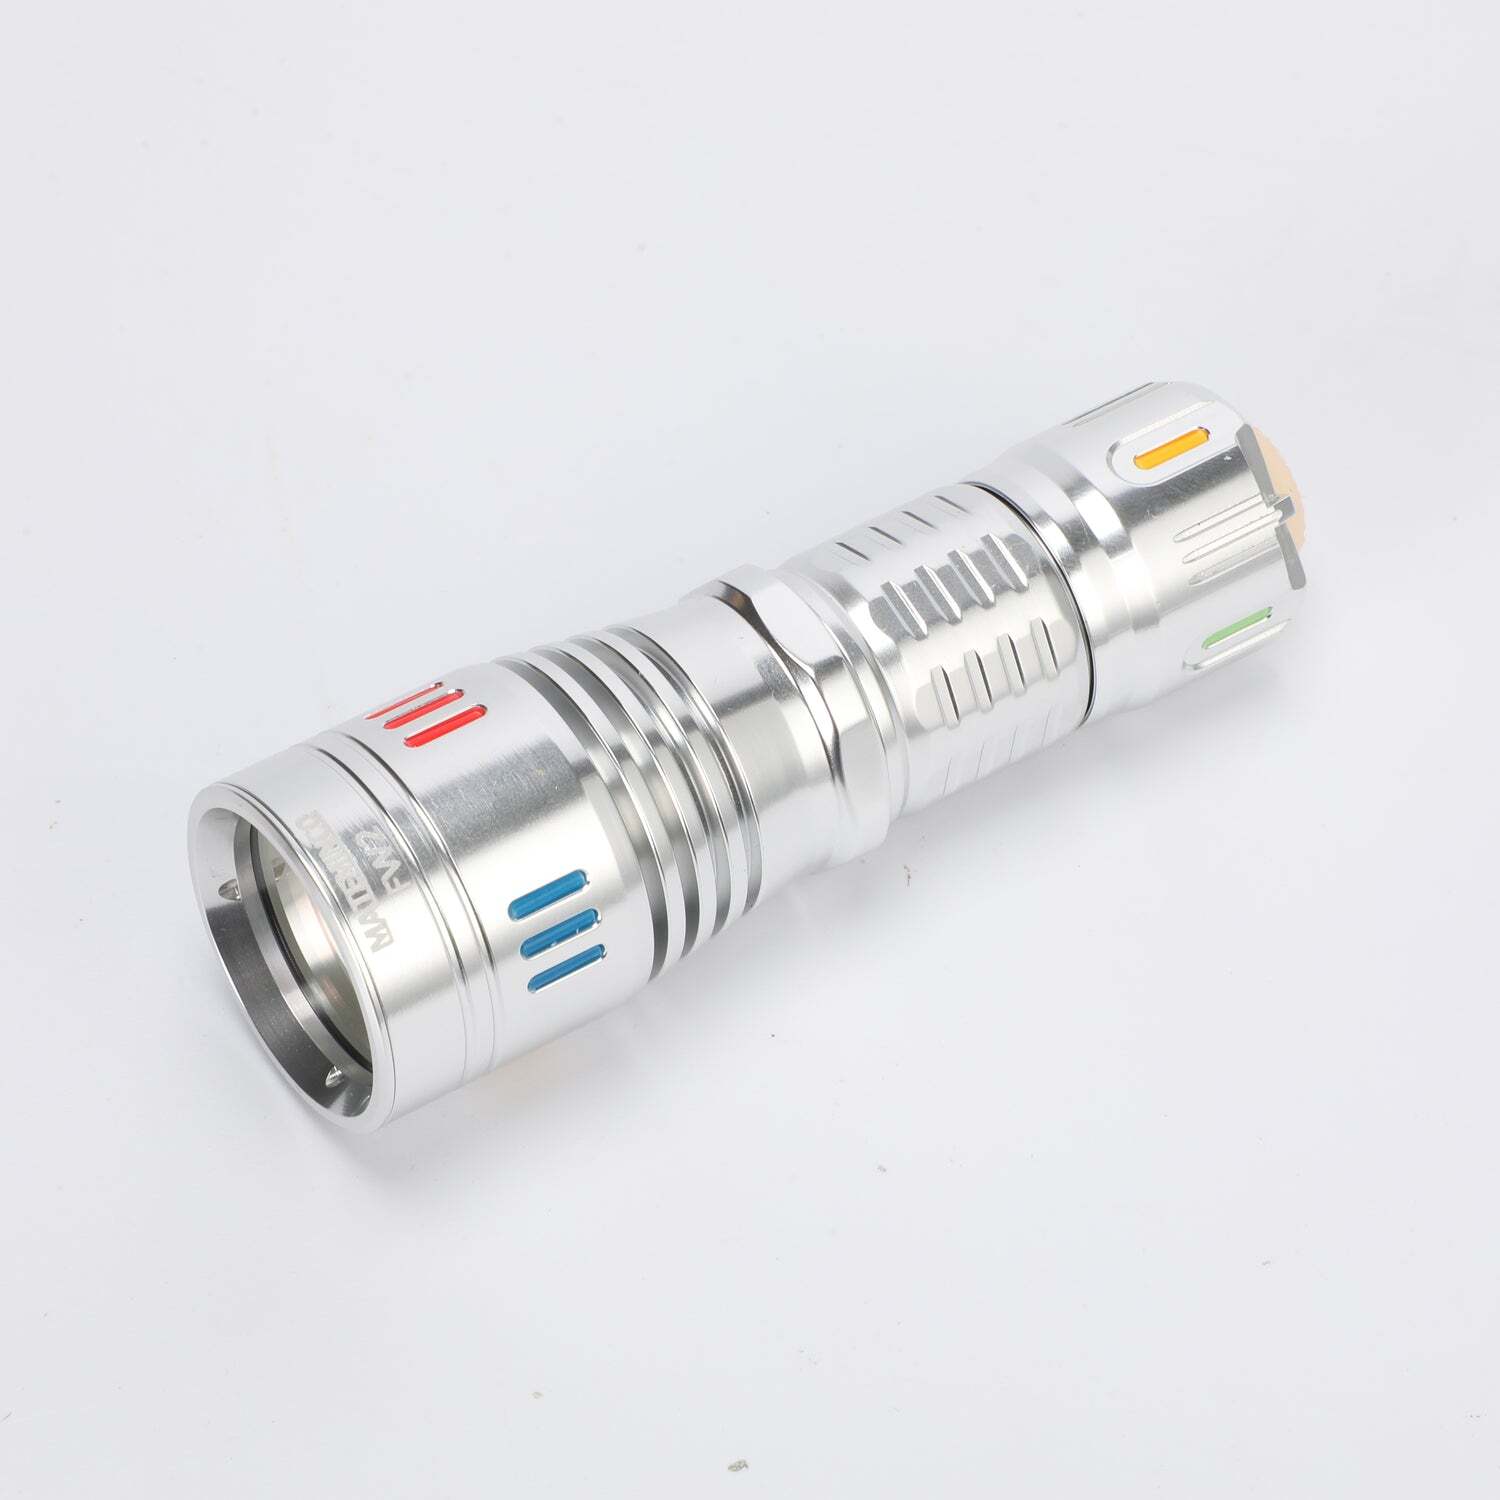 Mateminco FW2 White Laser Emitter 1303m 310lm Thrower LEP Flashlight